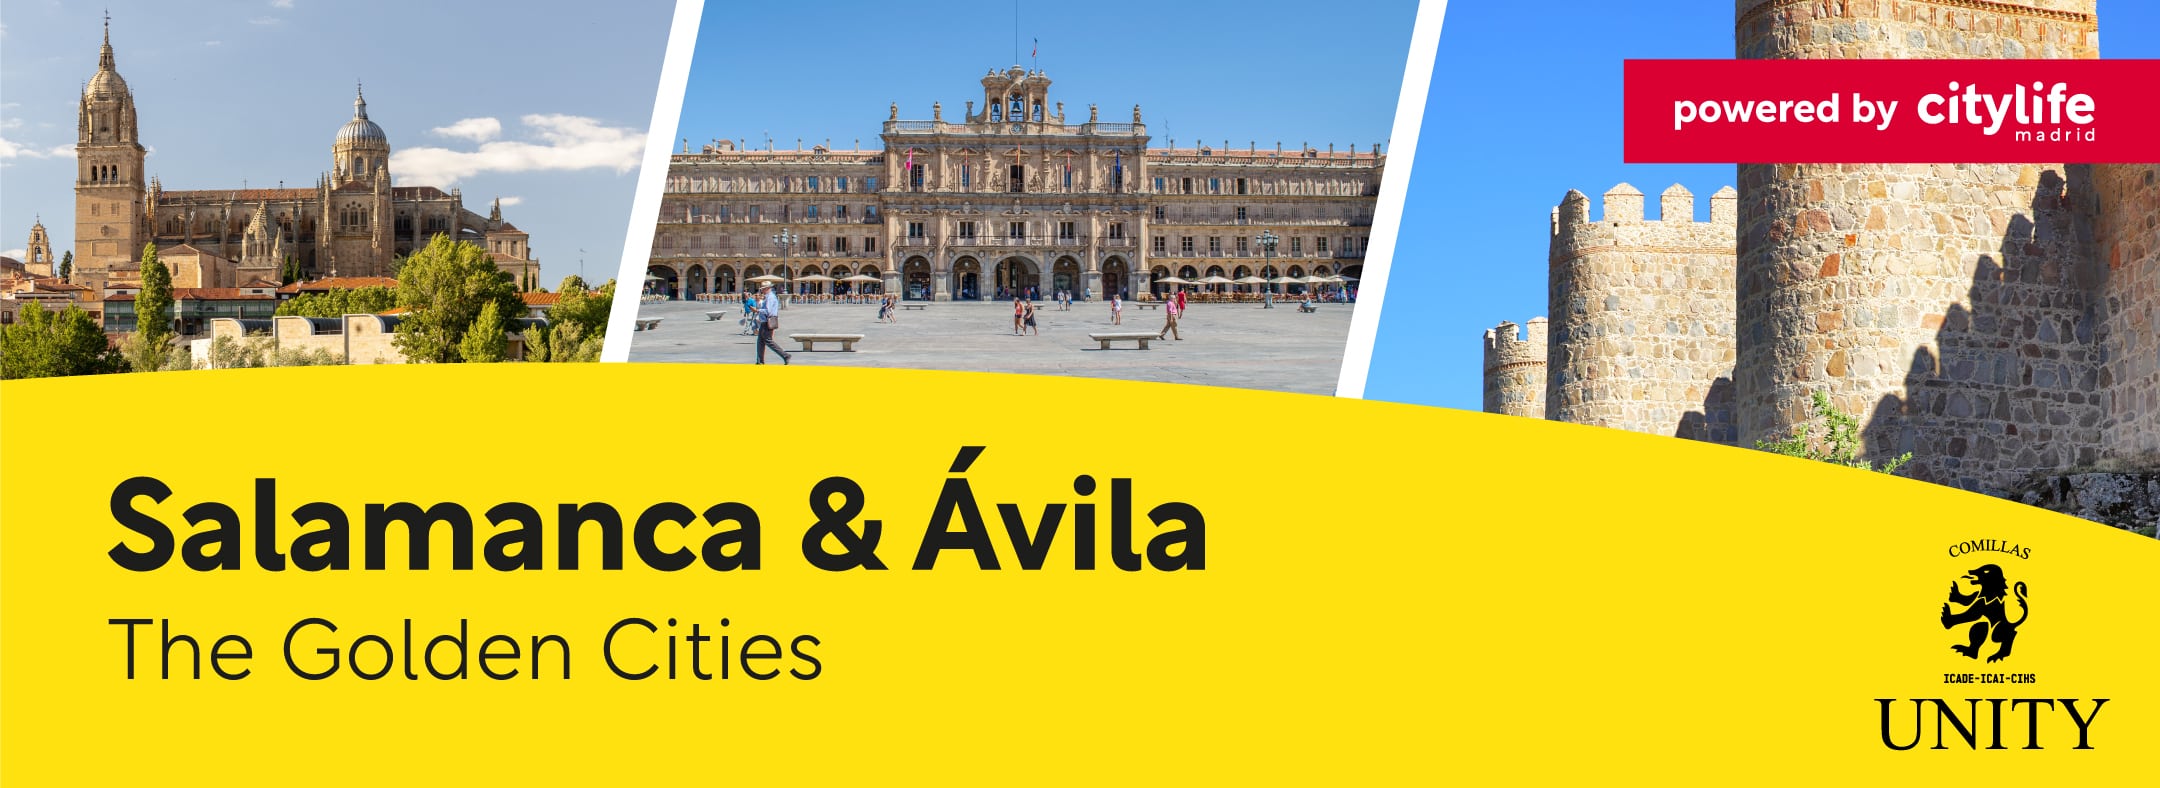 citylife-madrid-trips-salamanca-avila-unity-web-banner